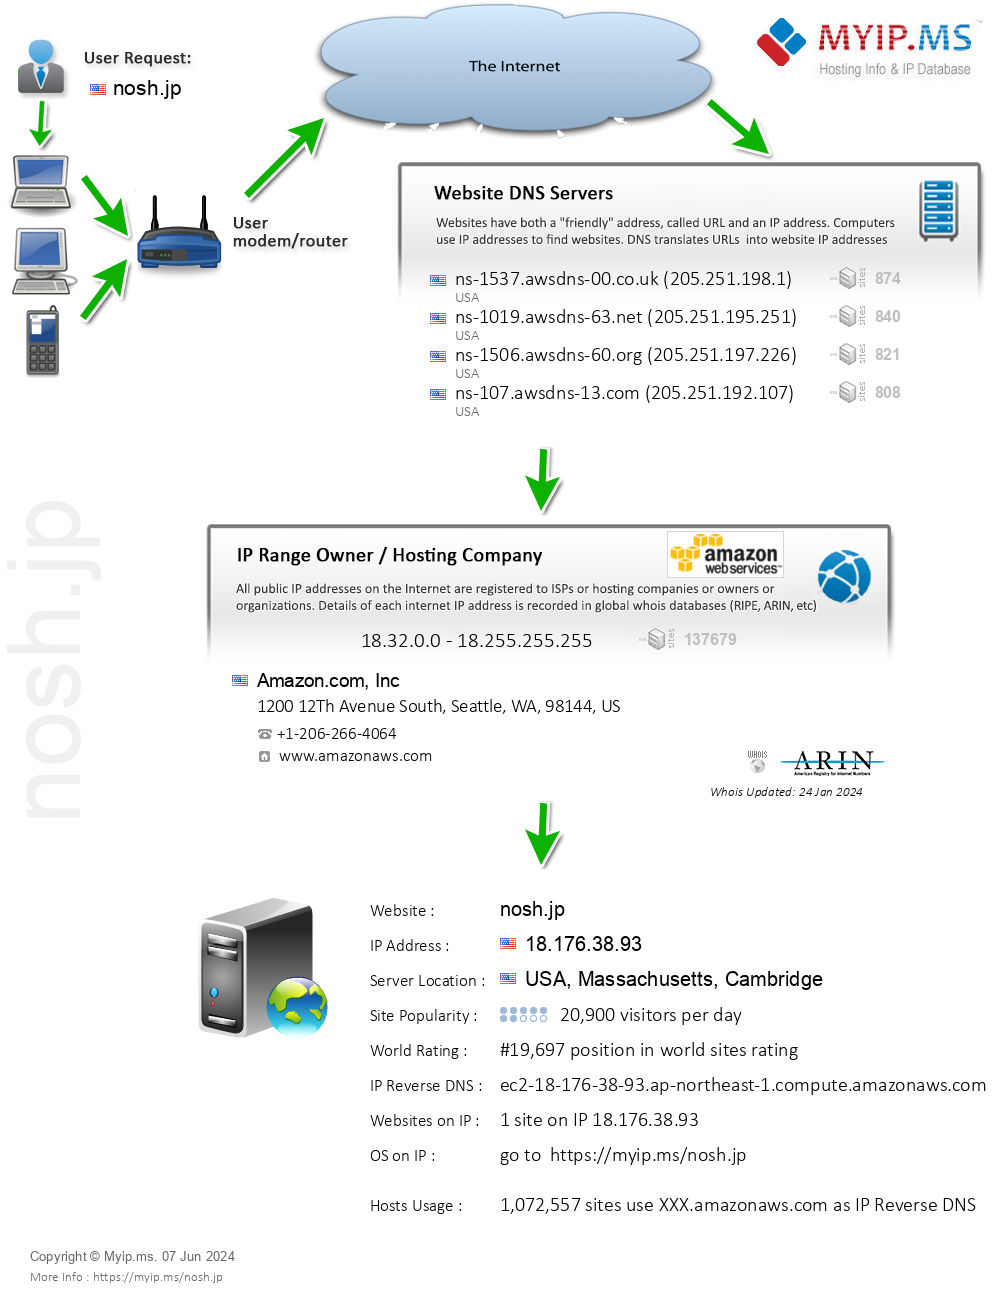 Nosh.jp - Website Hosting Visual IP Diagram